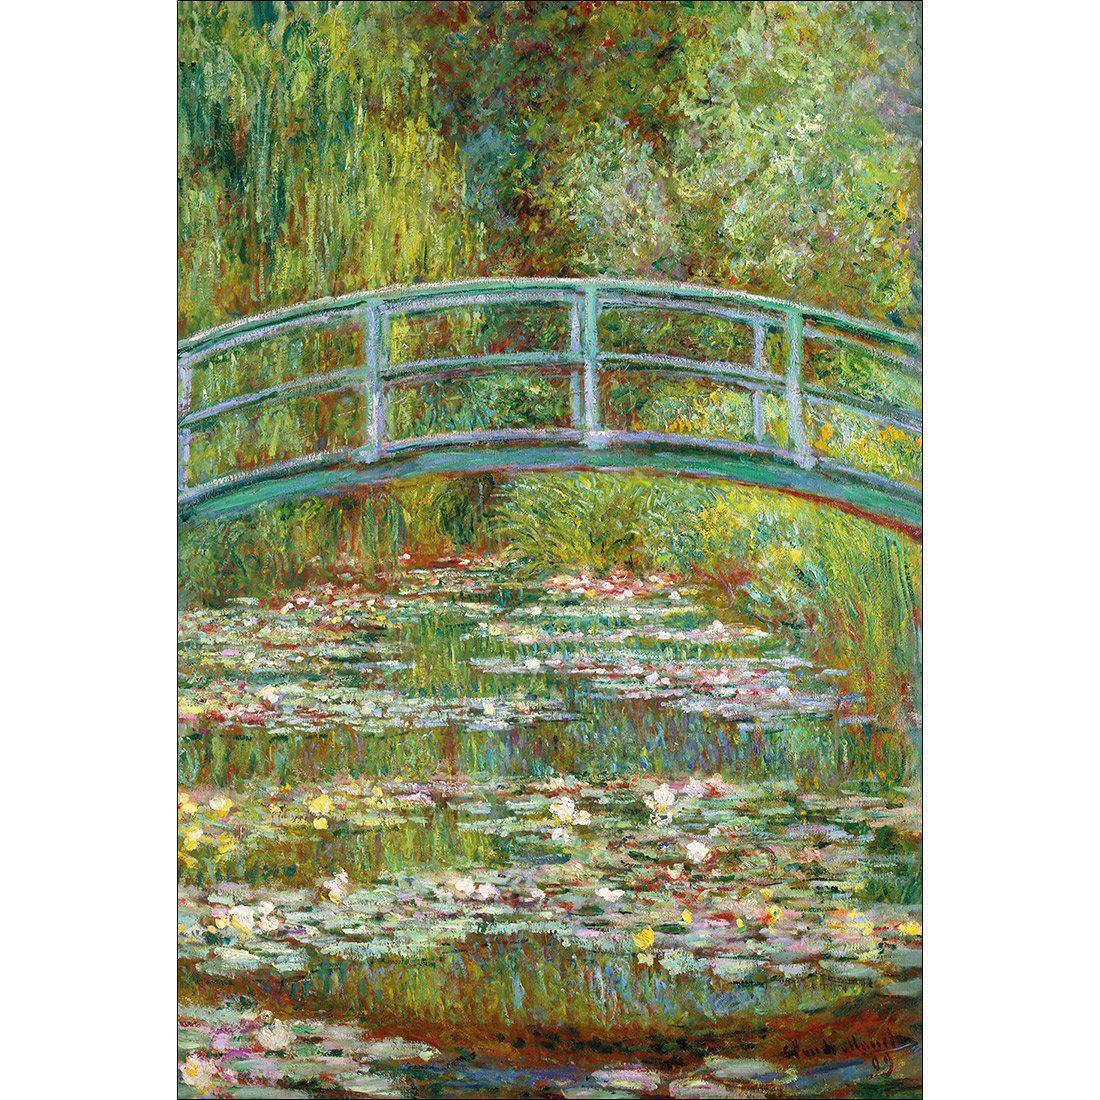 Bridge Over Rose Pond - Monet Canvas Art-Canvas-Wall Art Designs-45x30cm-Canvas - No Frame-Wall Art Designs